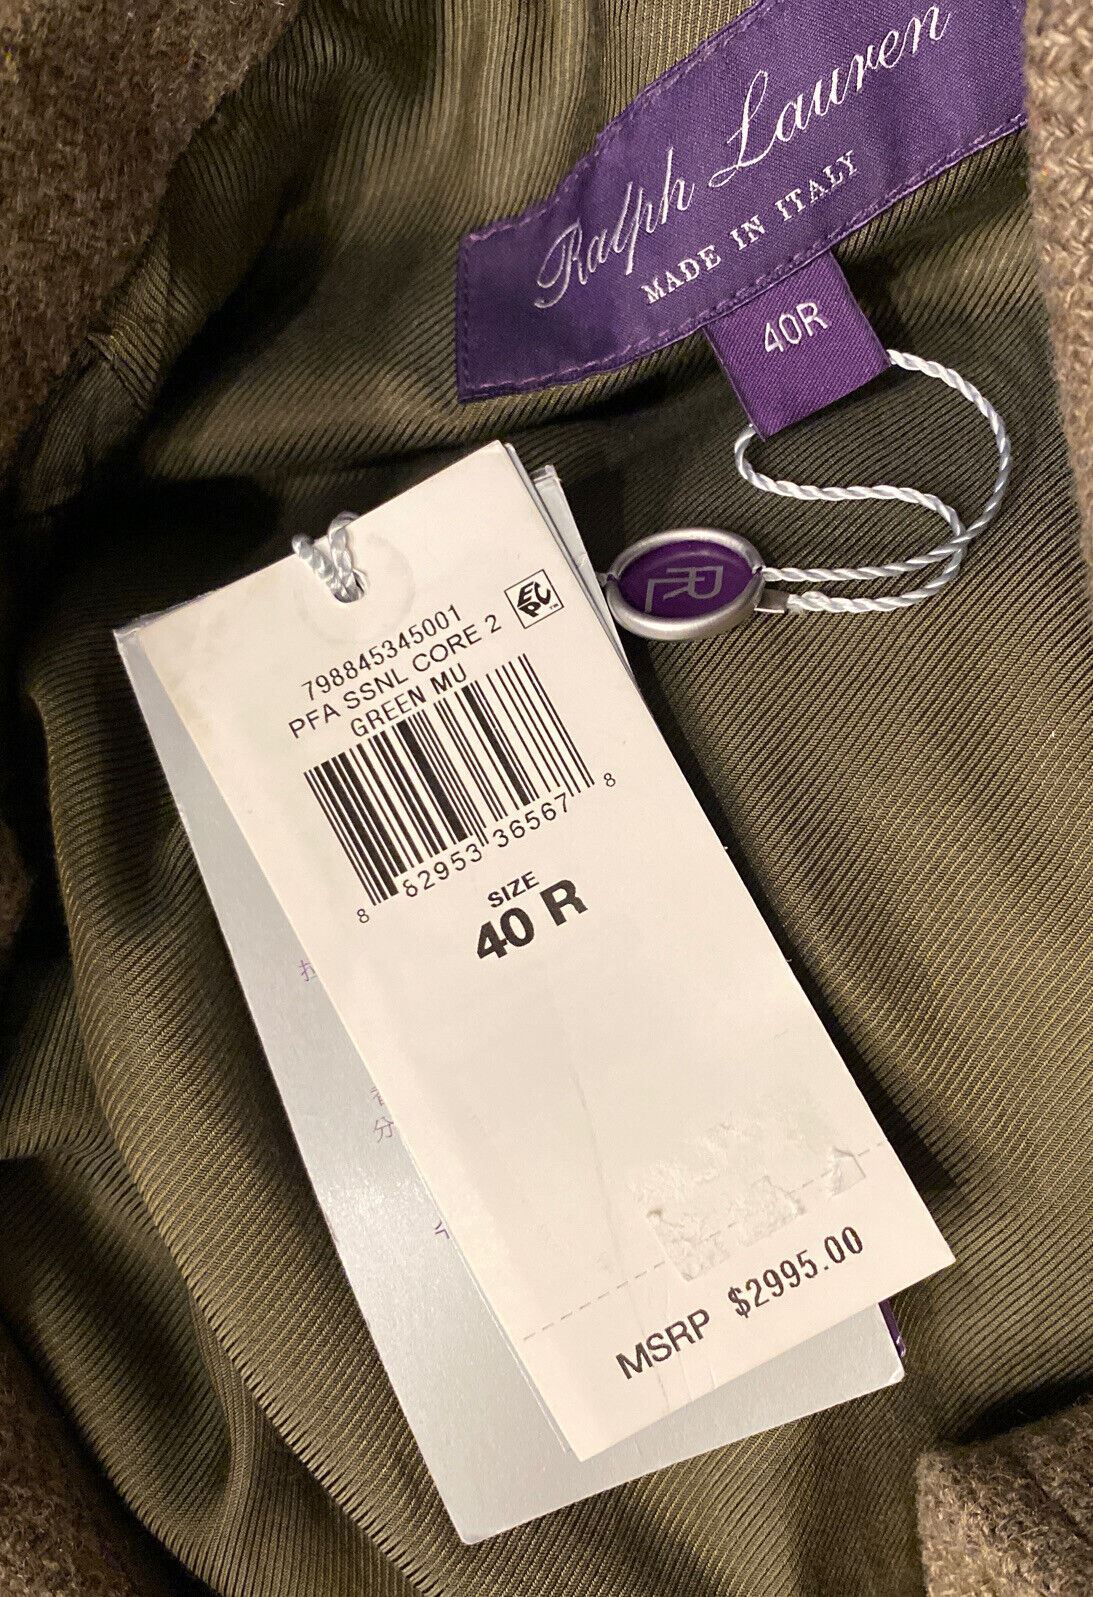 NWT $2995 Ralph Lauren Purple Label Мужское пальто из шерсти и шелка зеленого цвета, размер 40, Италия 